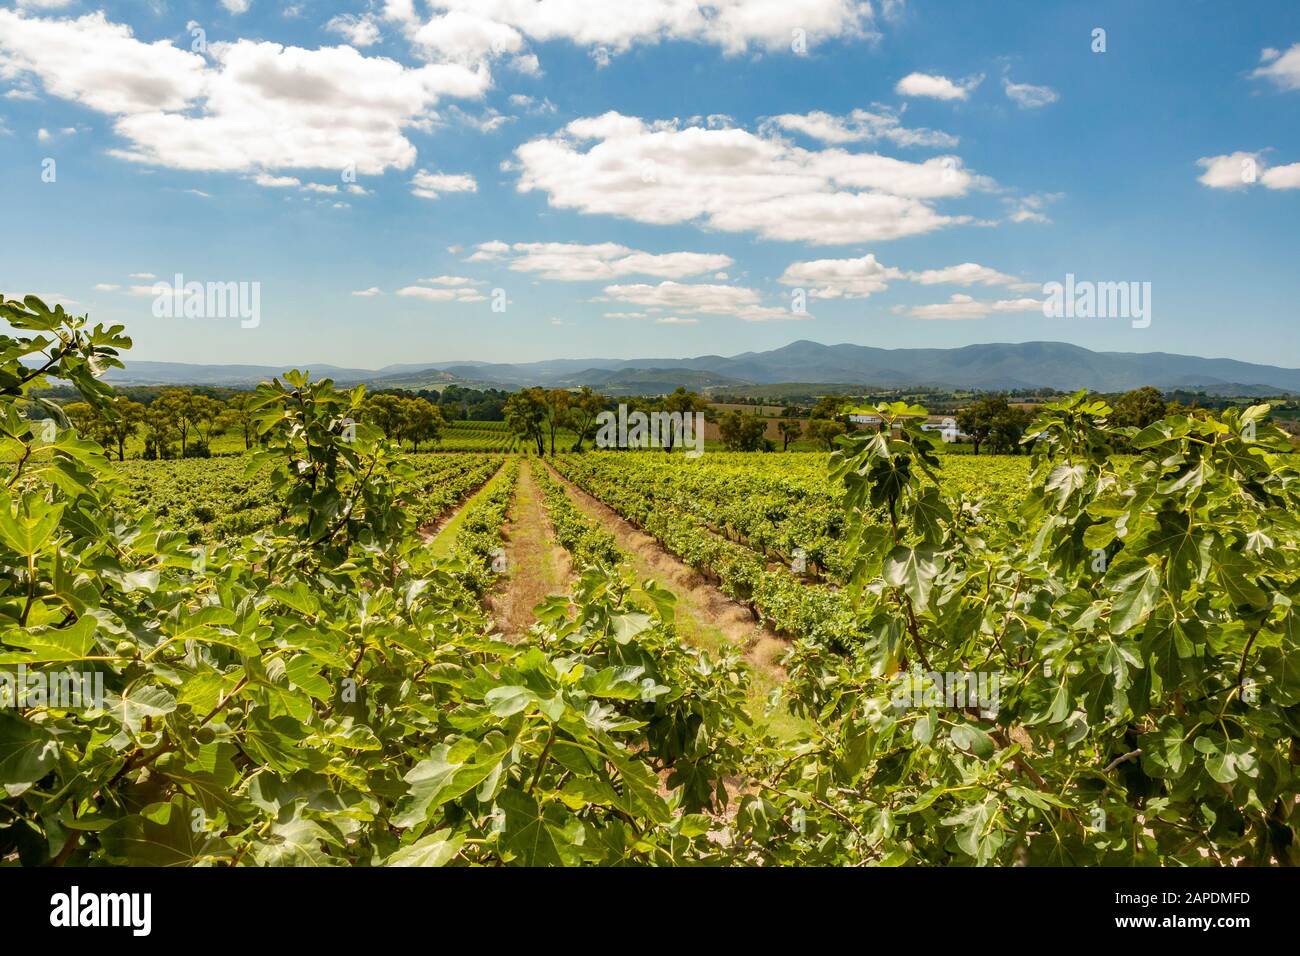 Rows of vines in the Yarra Yering vineyard in the Yarra Valley of Victoria, Australia. Stock Photo